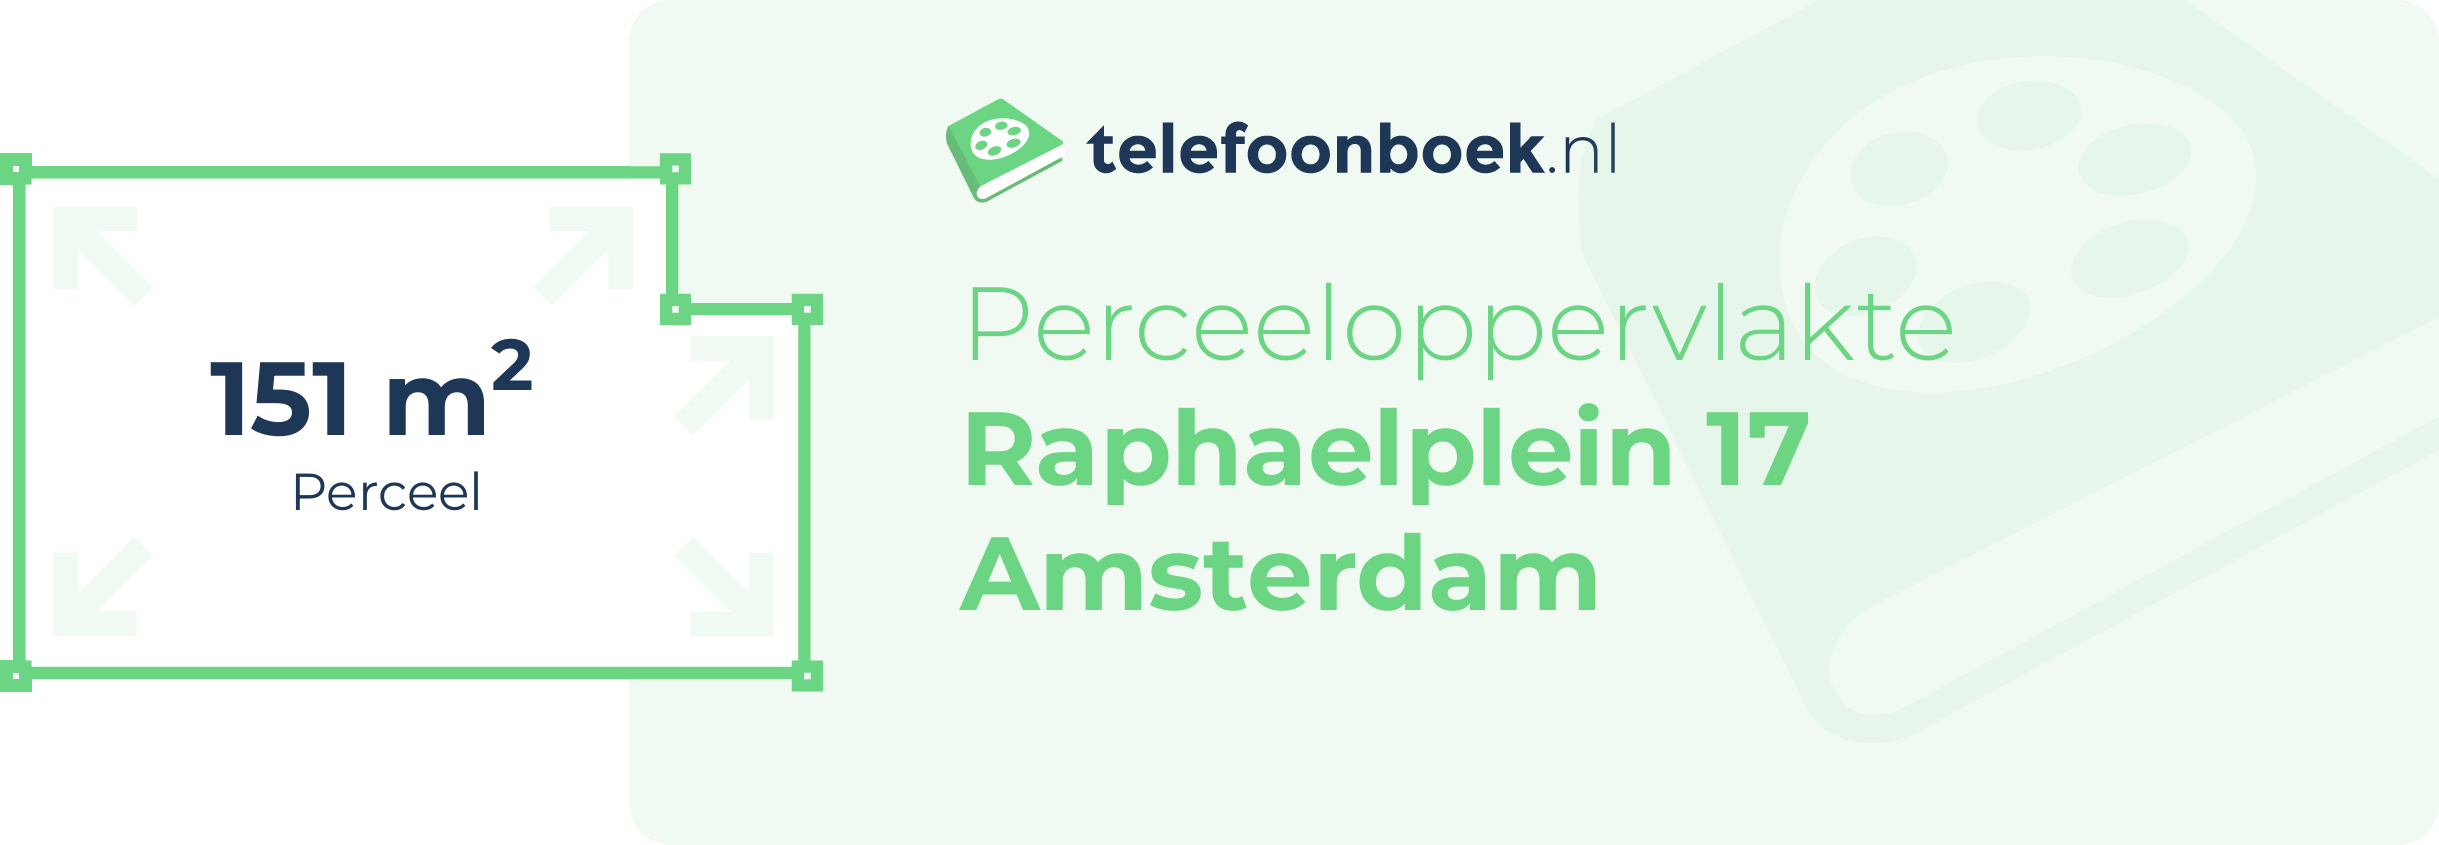 Perceeloppervlakte Raphaelplein 17 Amsterdam